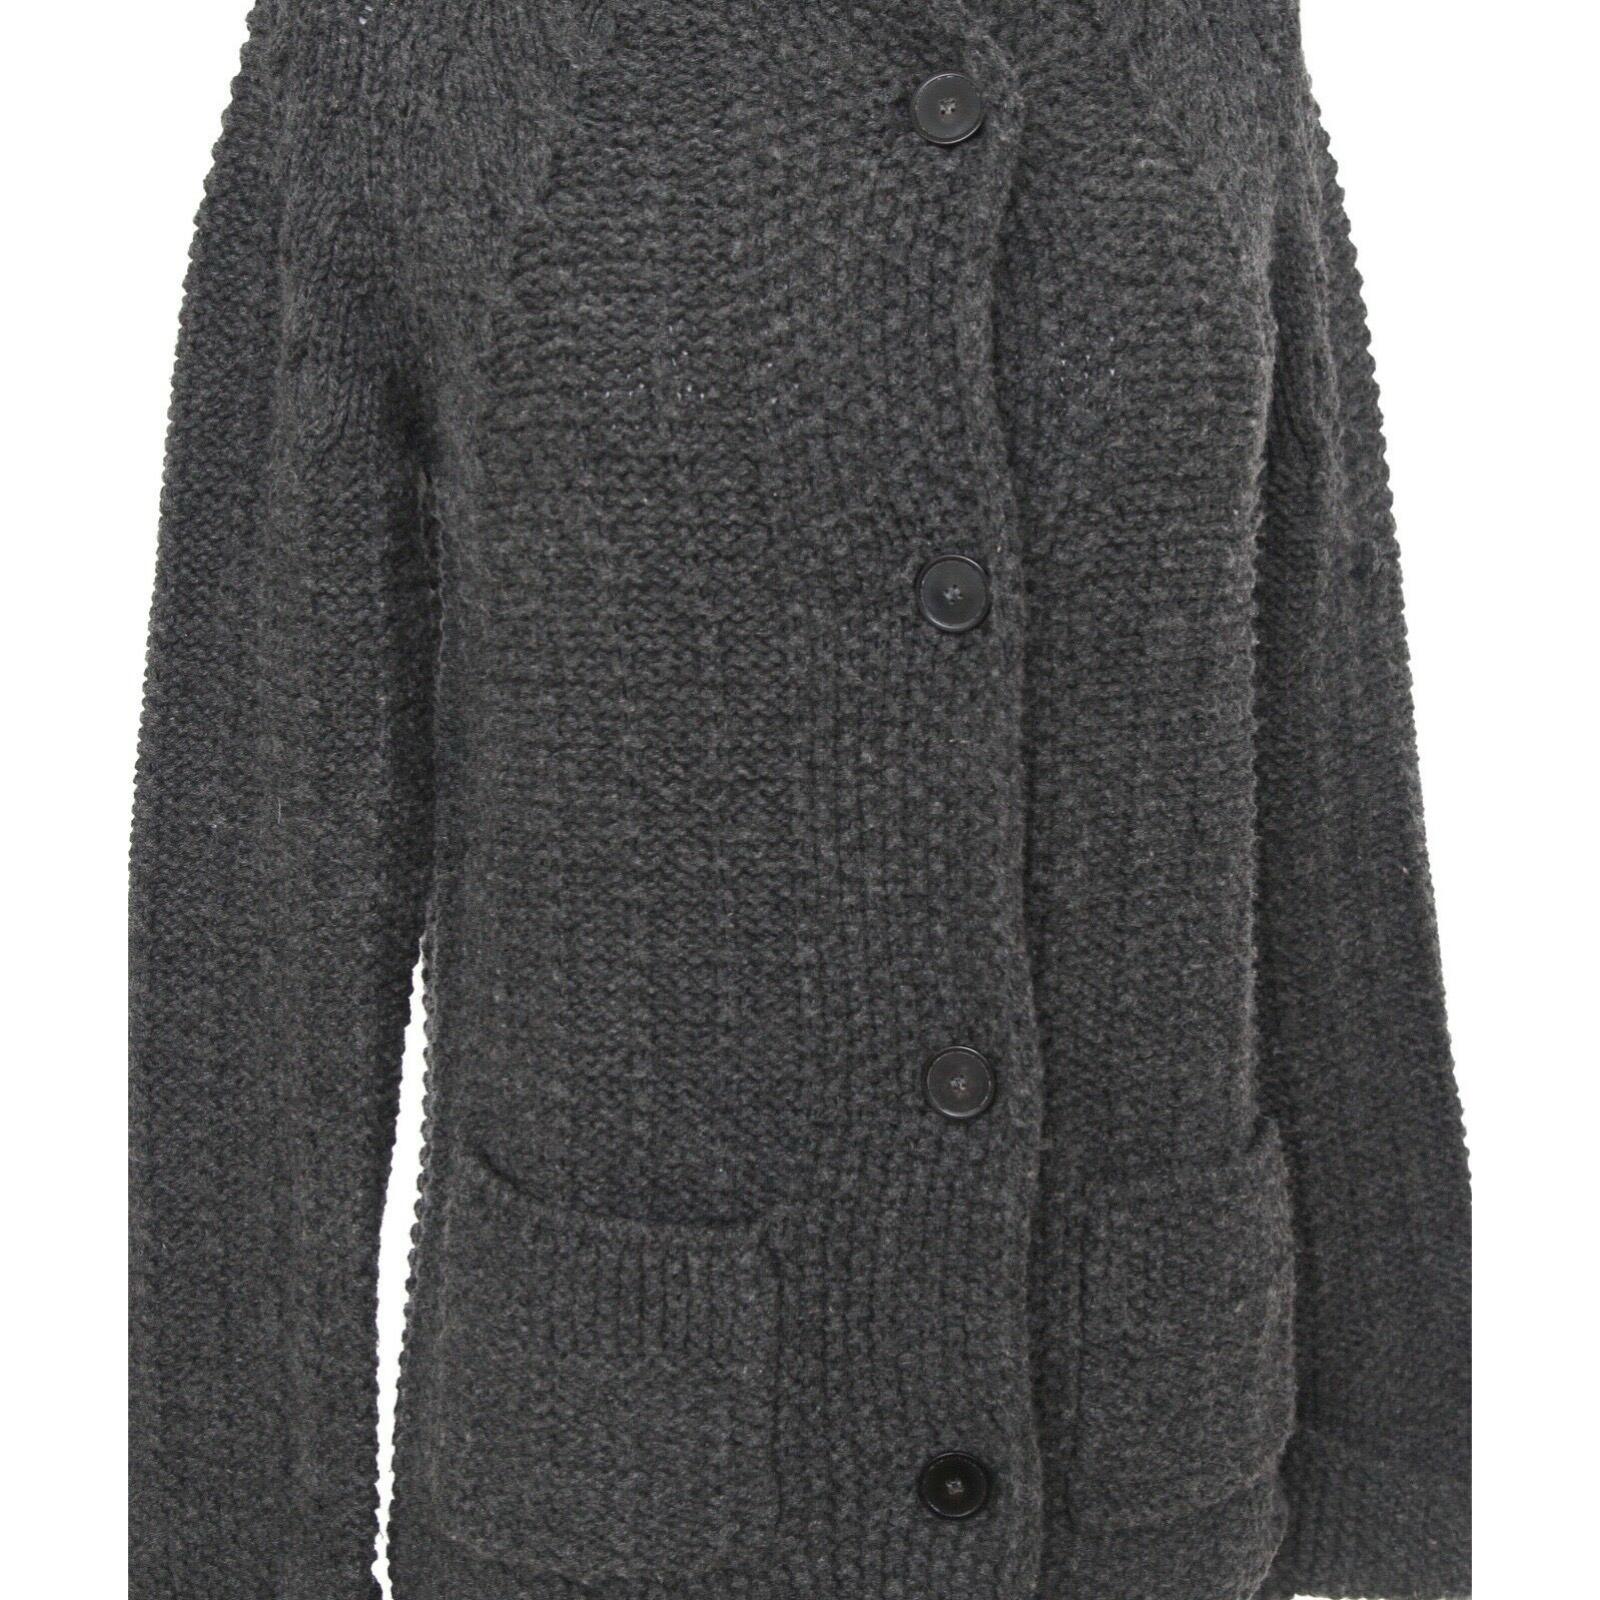 CHLOE Strickjacke Pulloverjacke mit langen Ärmeln CHARCOAL GREY Gr. XS 2011 Damen im Angebot